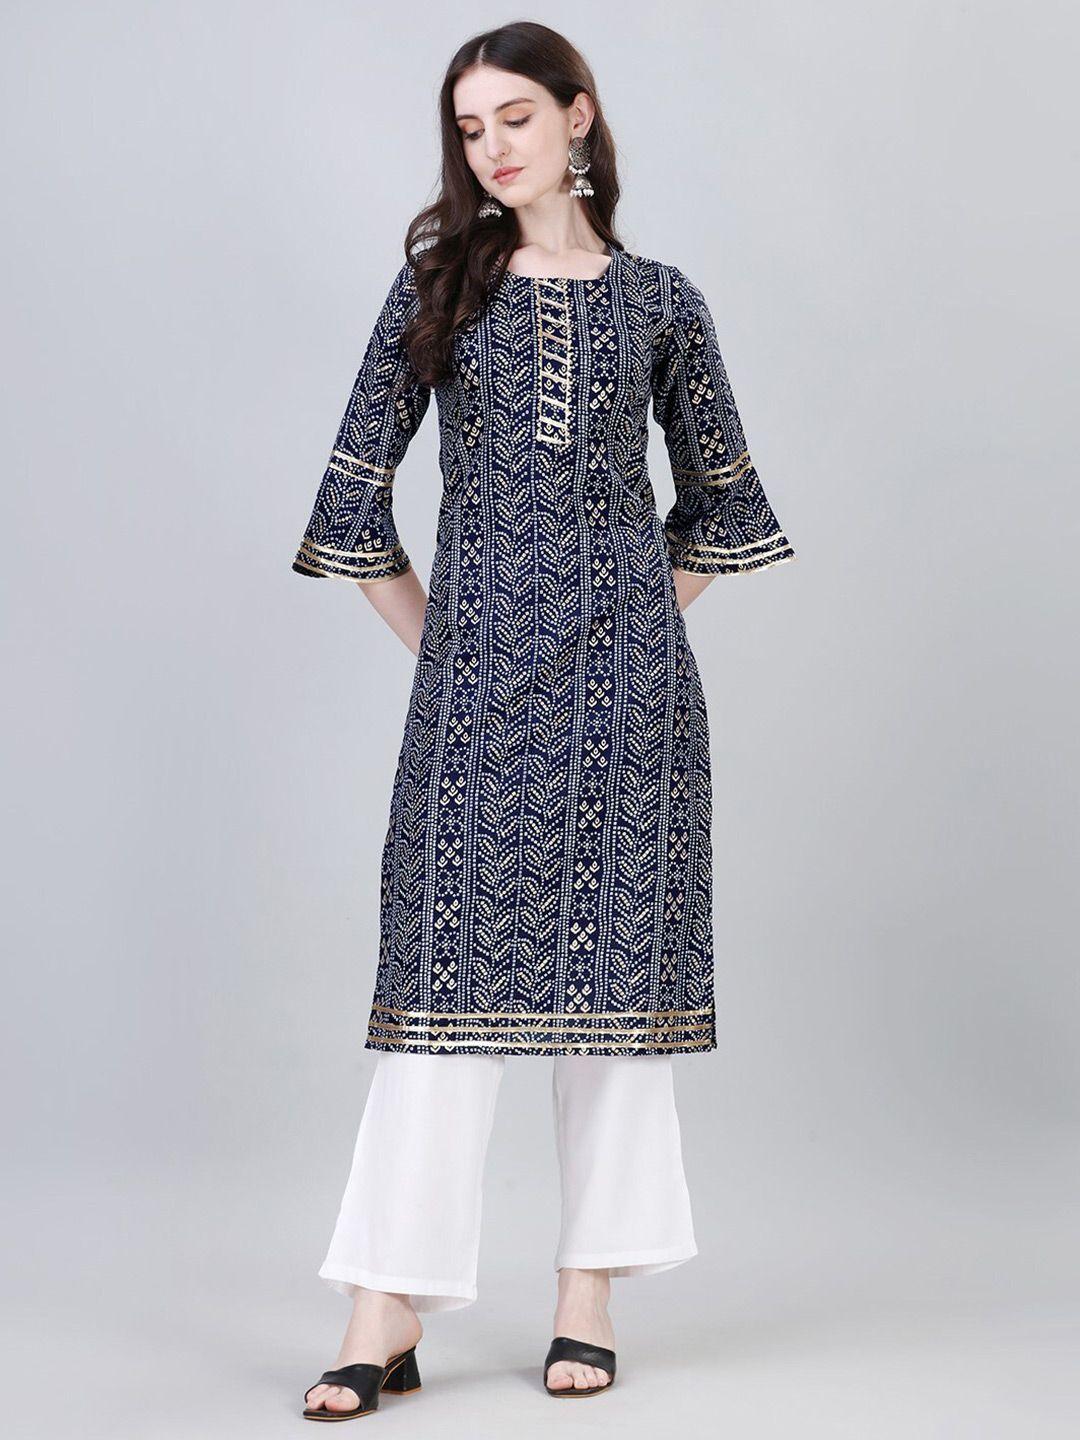 modestouze attires bandhani foil printed bell sleeves straight kurta